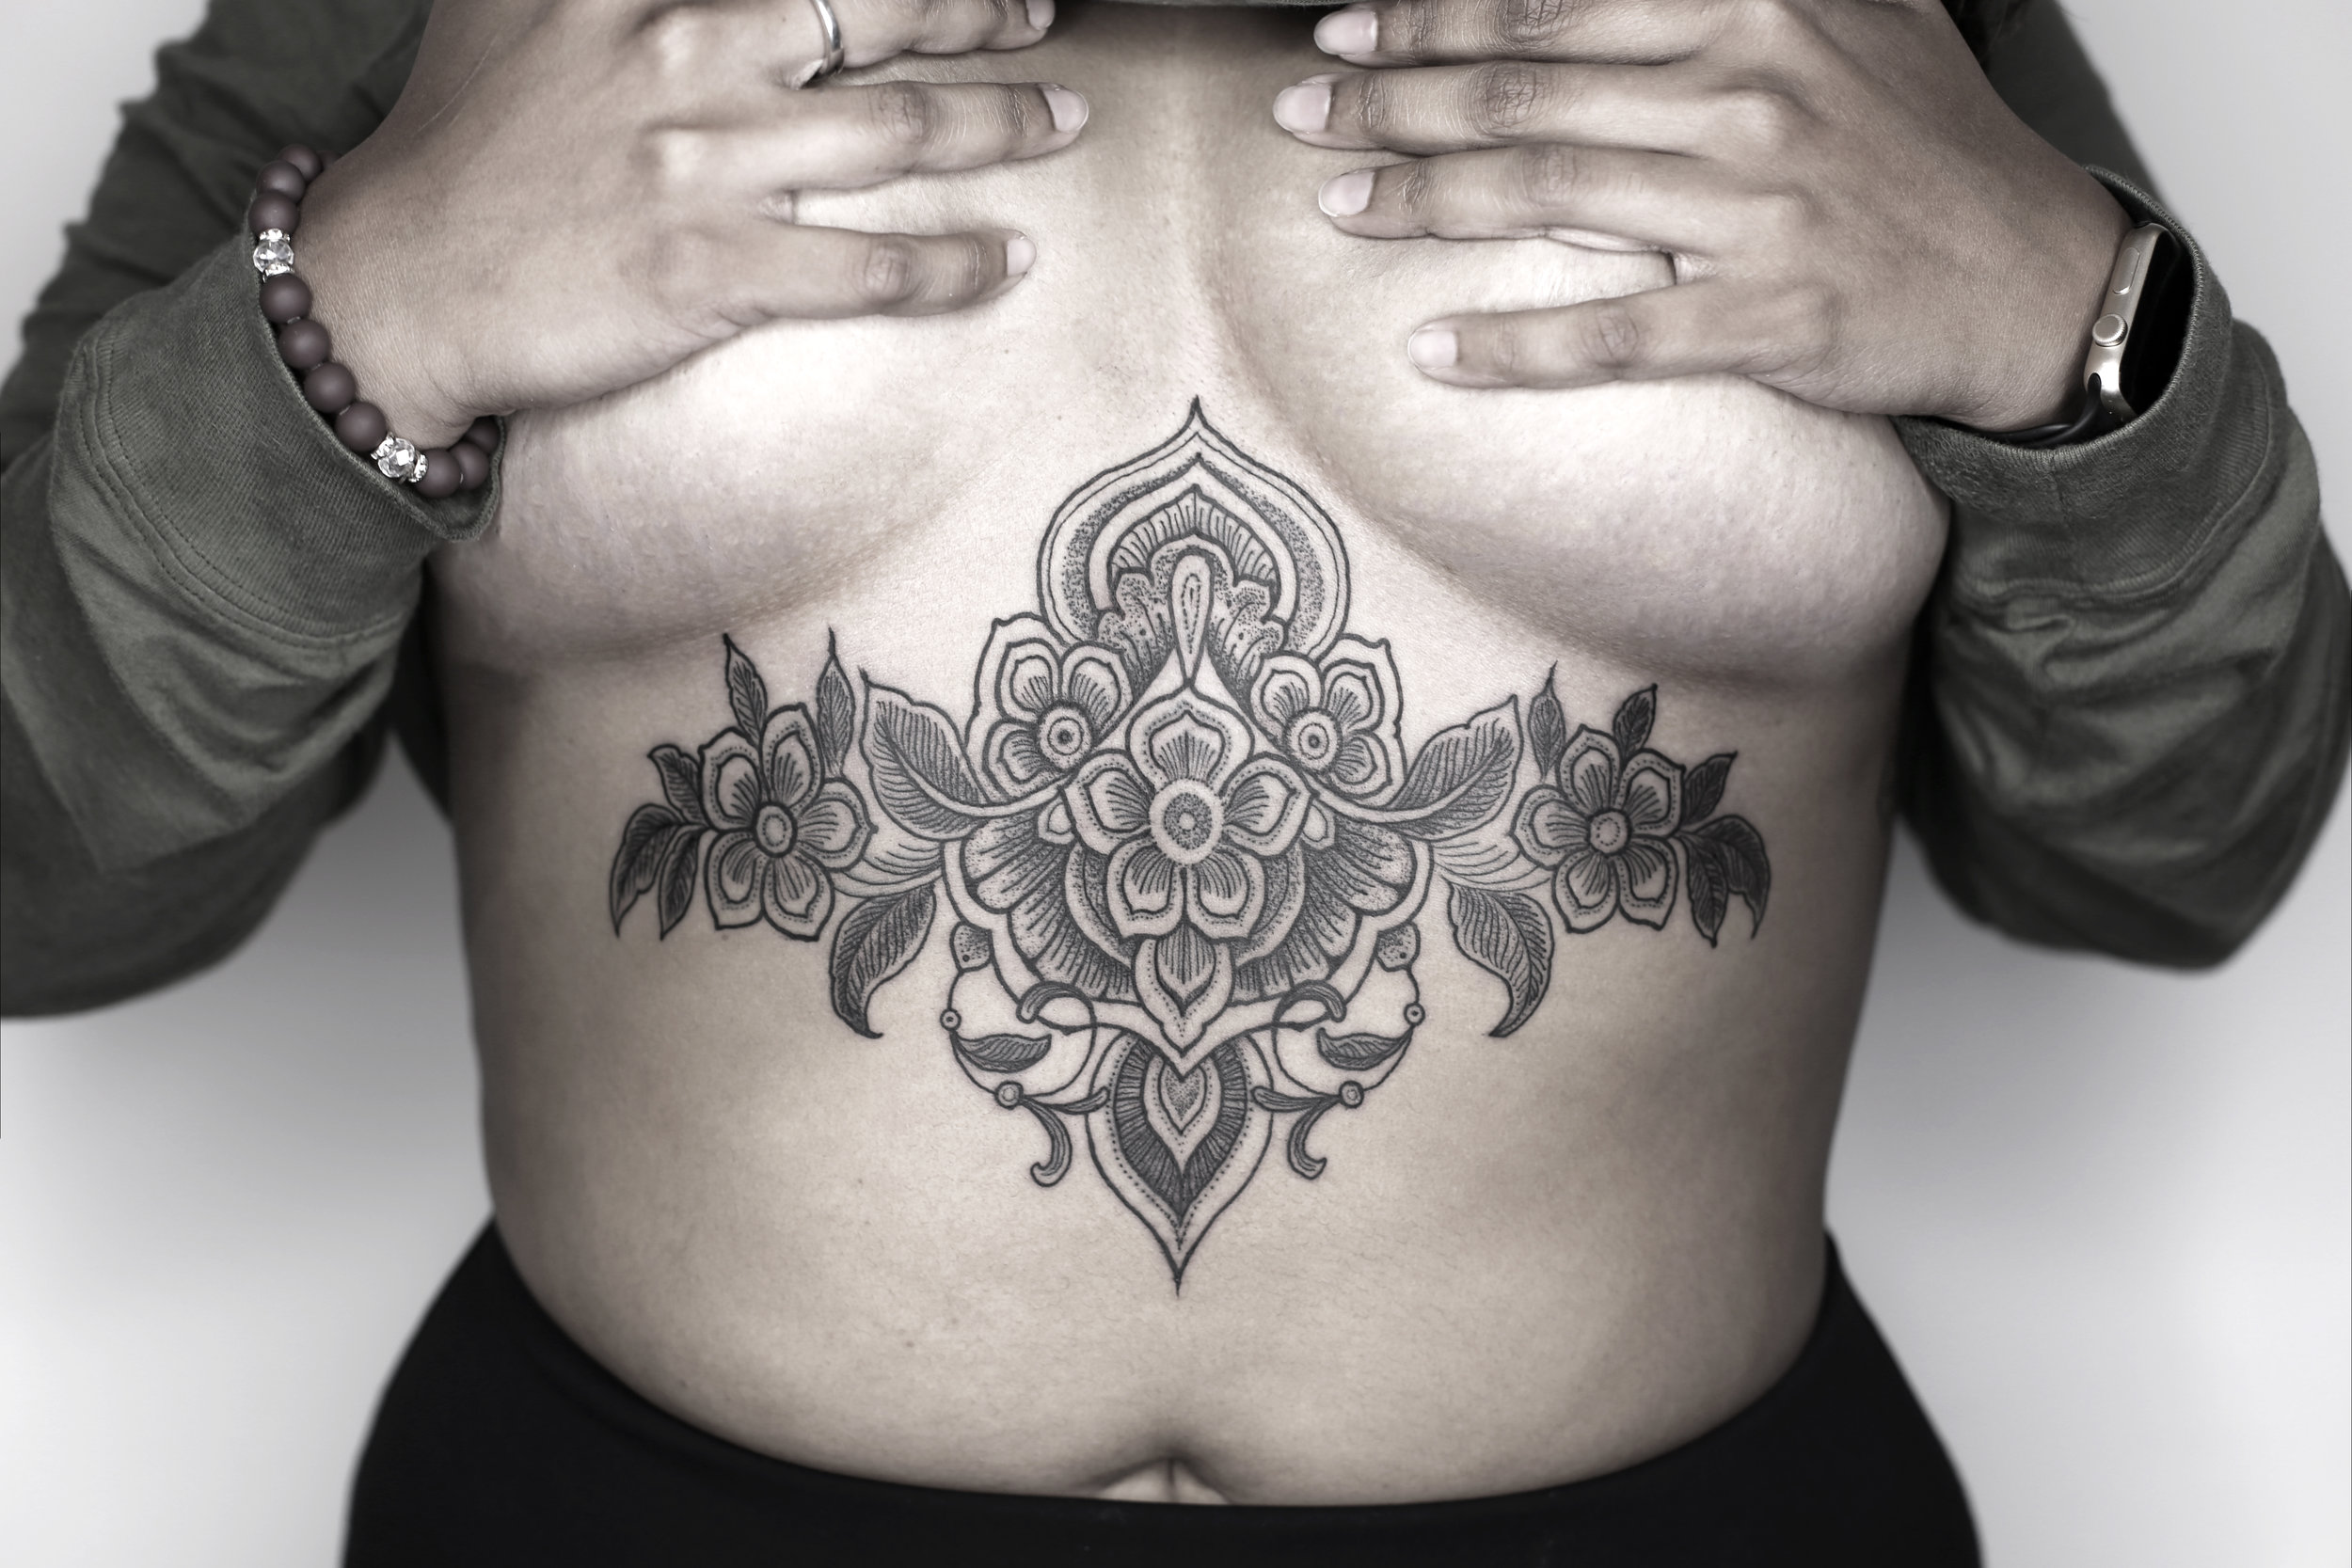 ejay tattoo singleton tattoo under boob sexy ink texas trinity groves.jpg